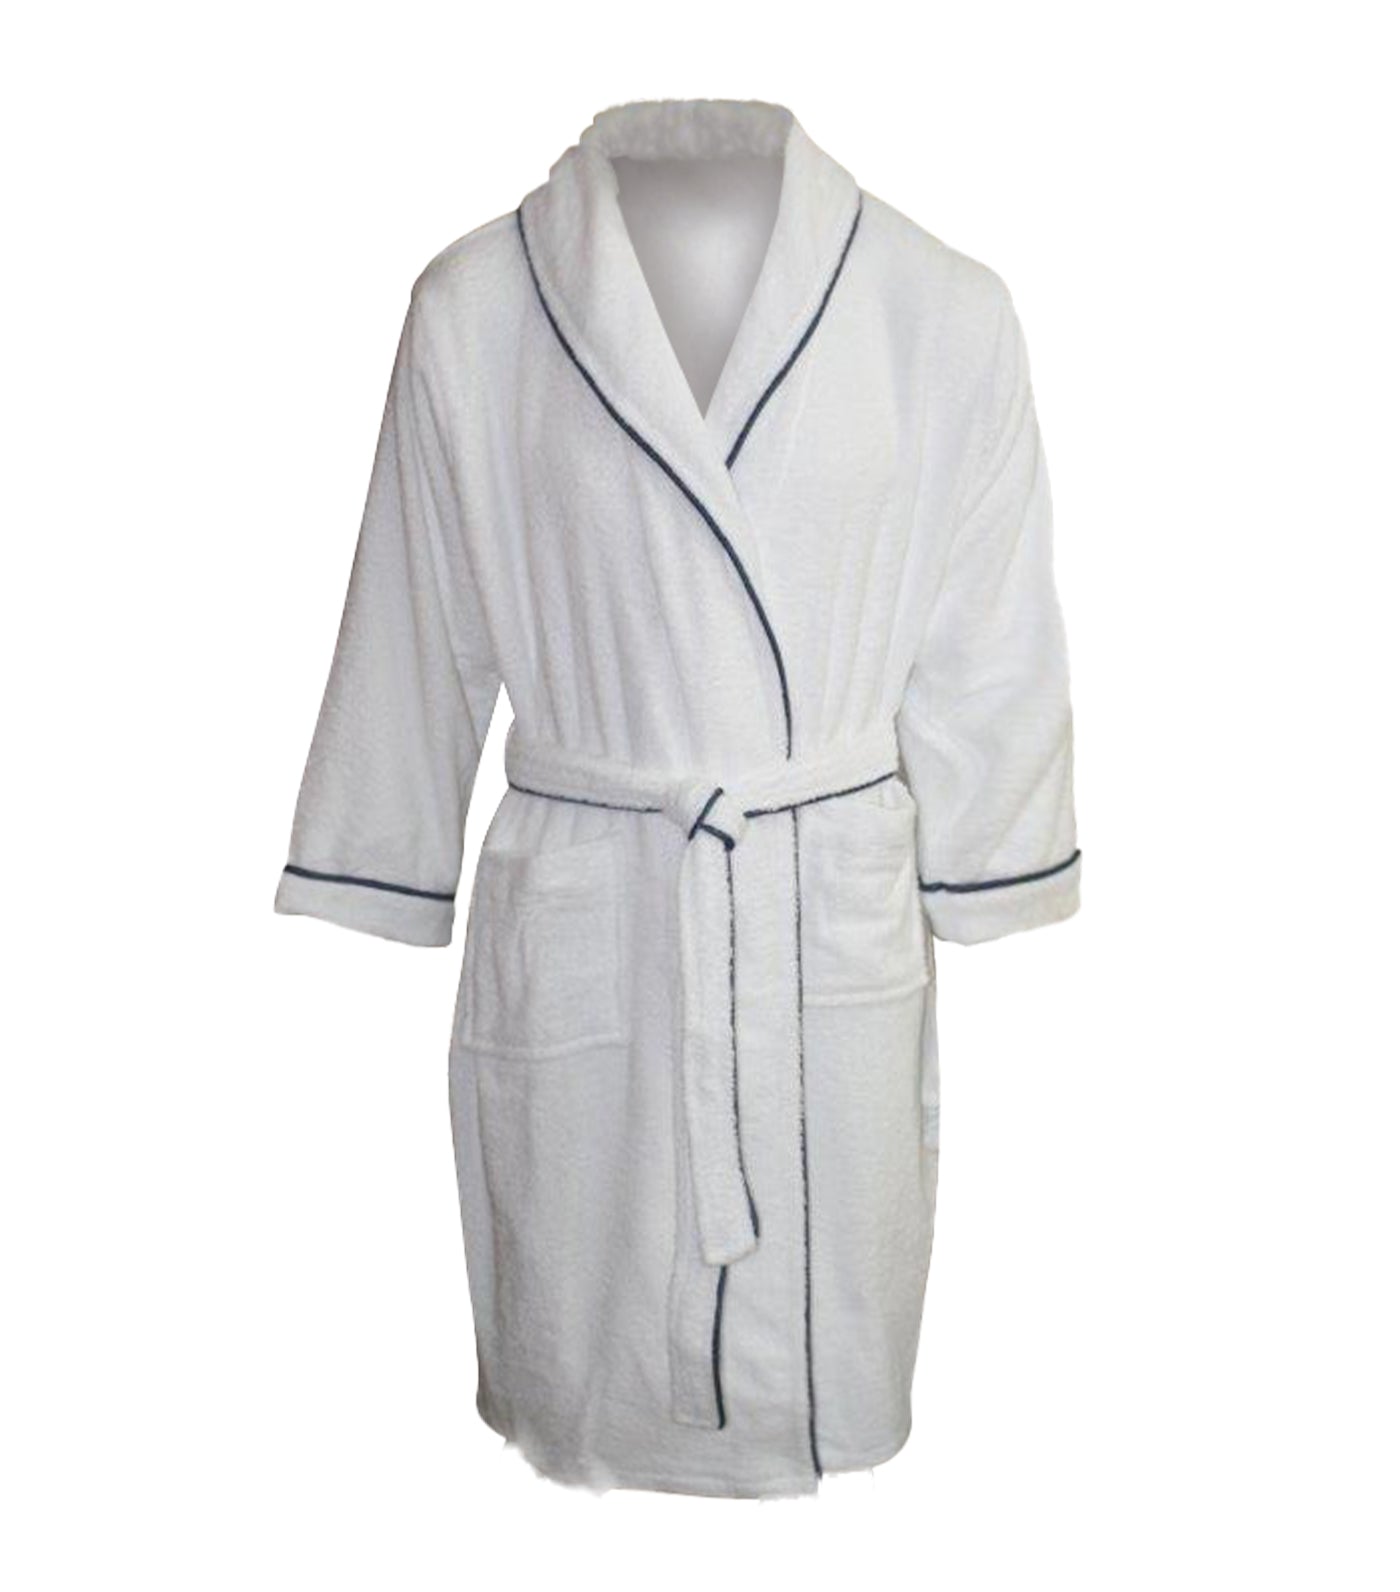 bloomsfield terry bathrobe - white/blue